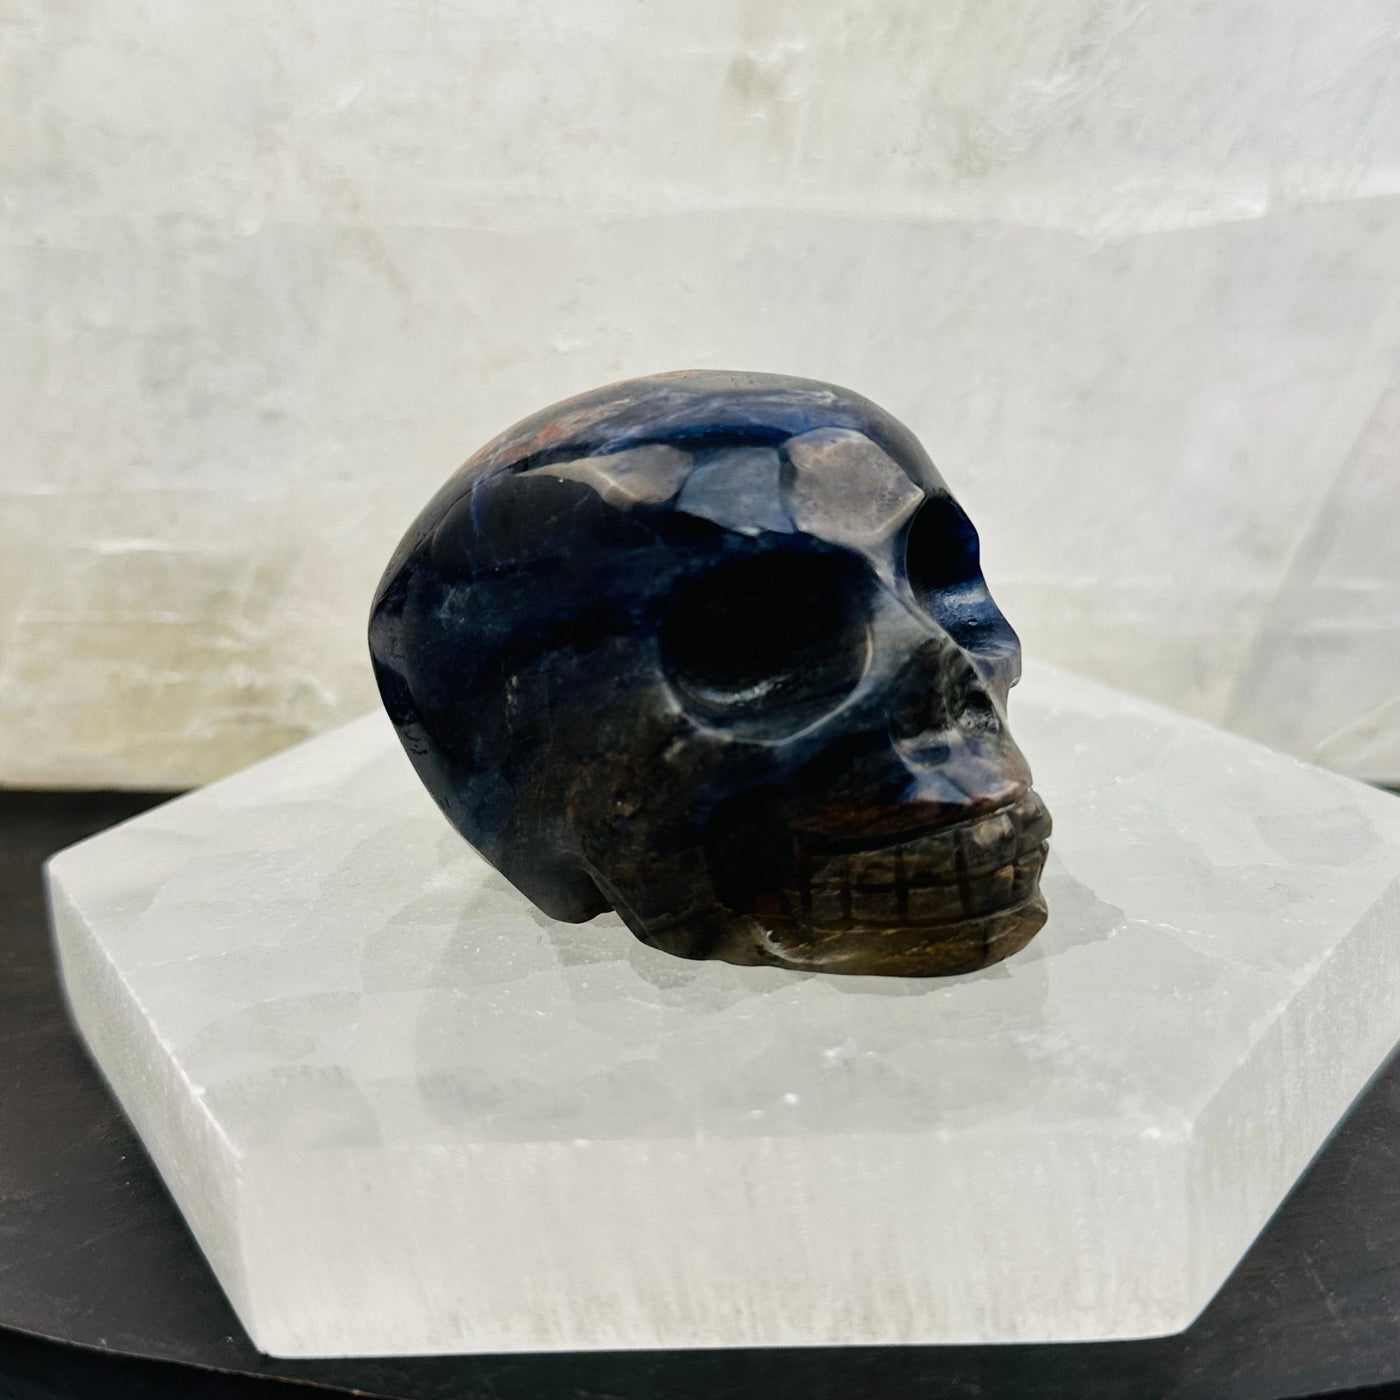 Crystal Skull displayed as home decor 